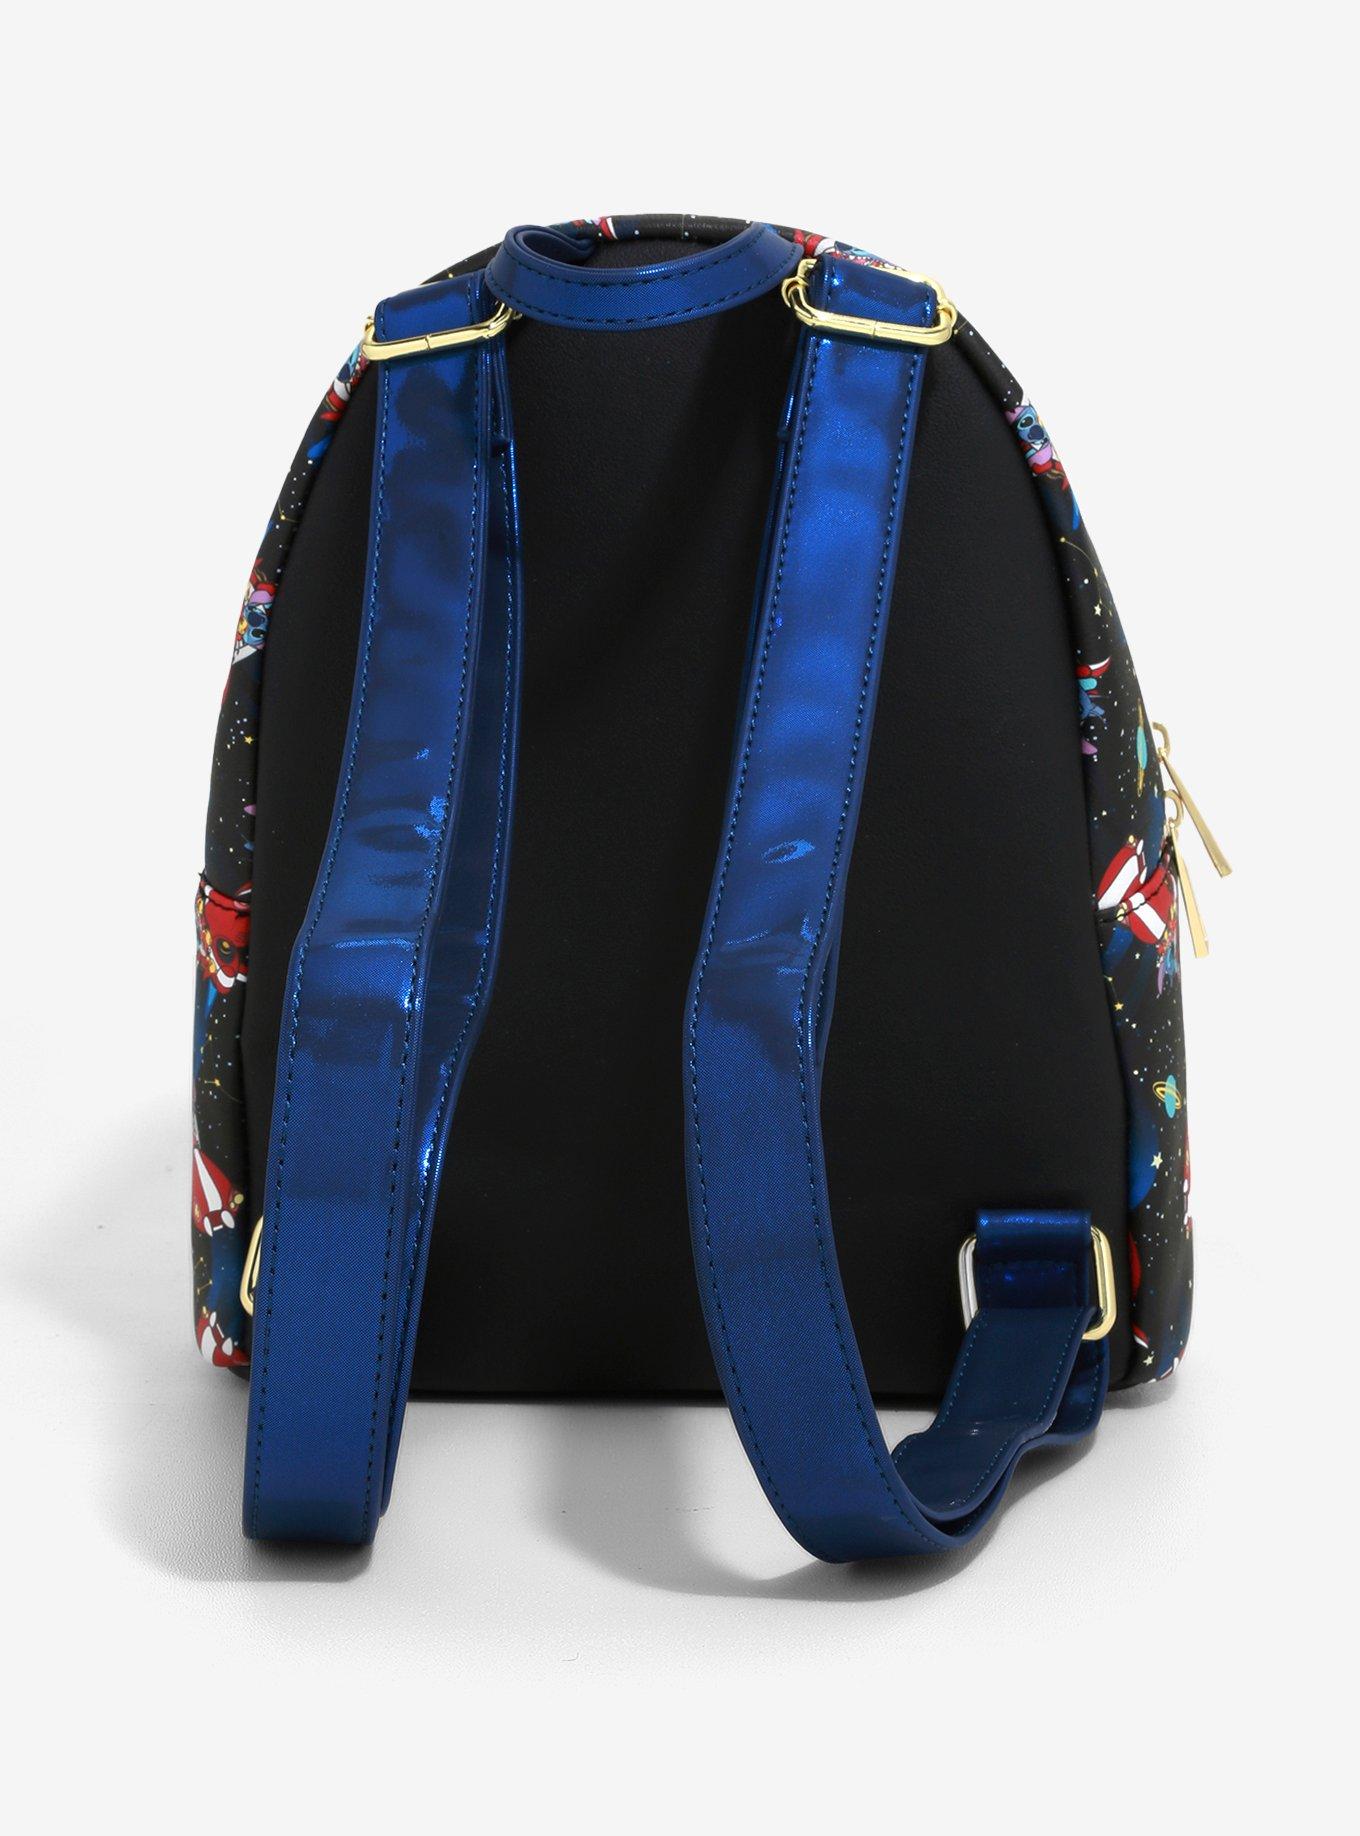 Disney Lilo & Stitch Spaceship Mini Backpack, , alternate